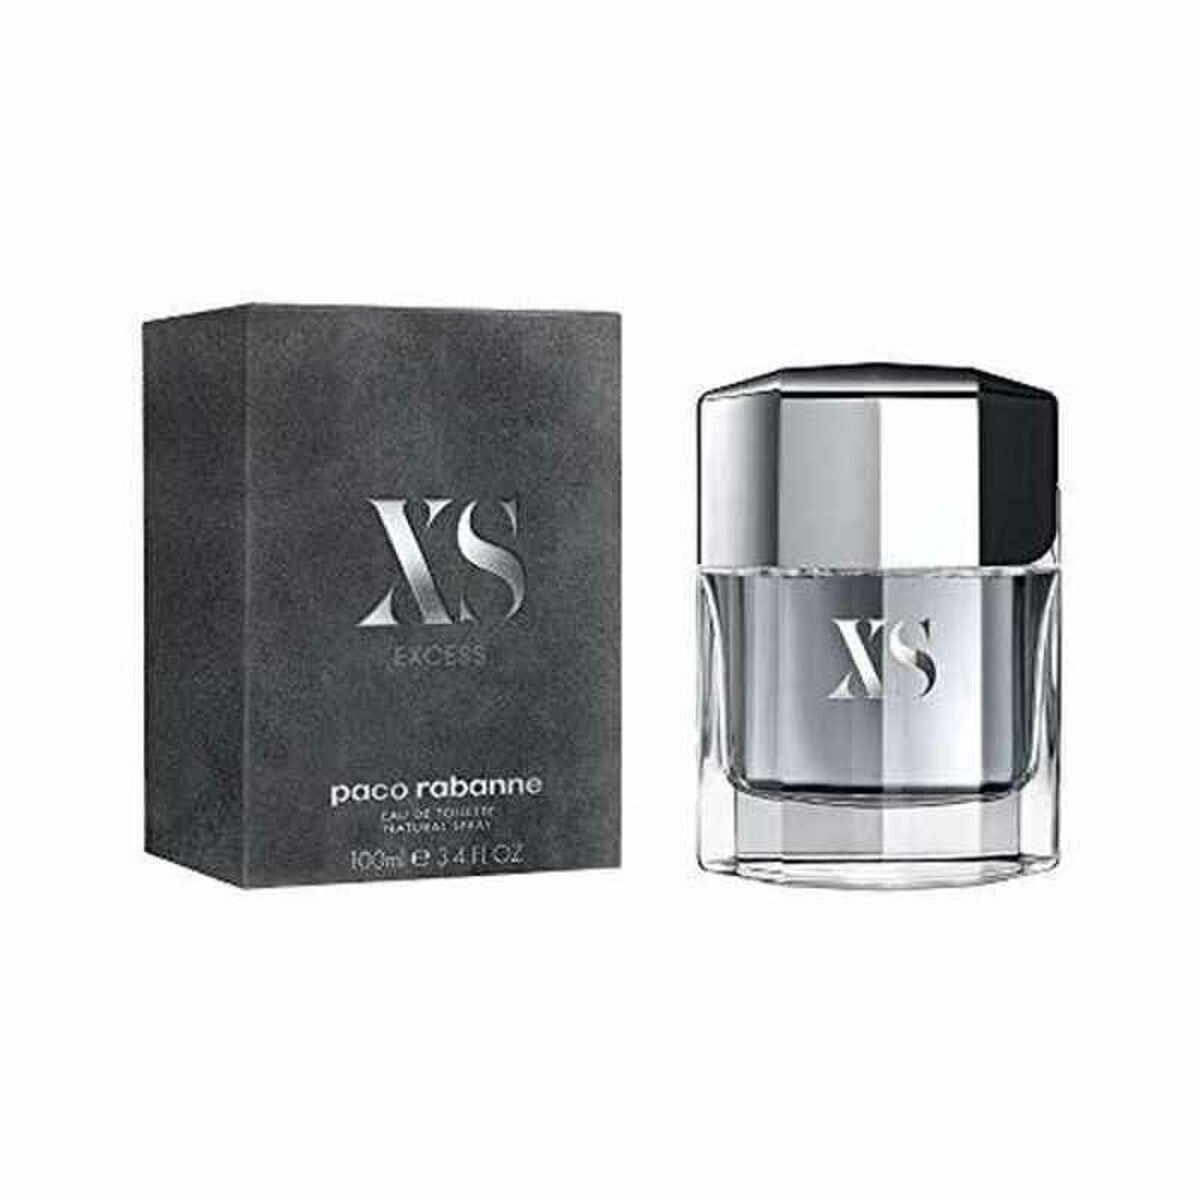 Men's Perfume XS Pour Homme Paco Rabanne EDT (100 ml)